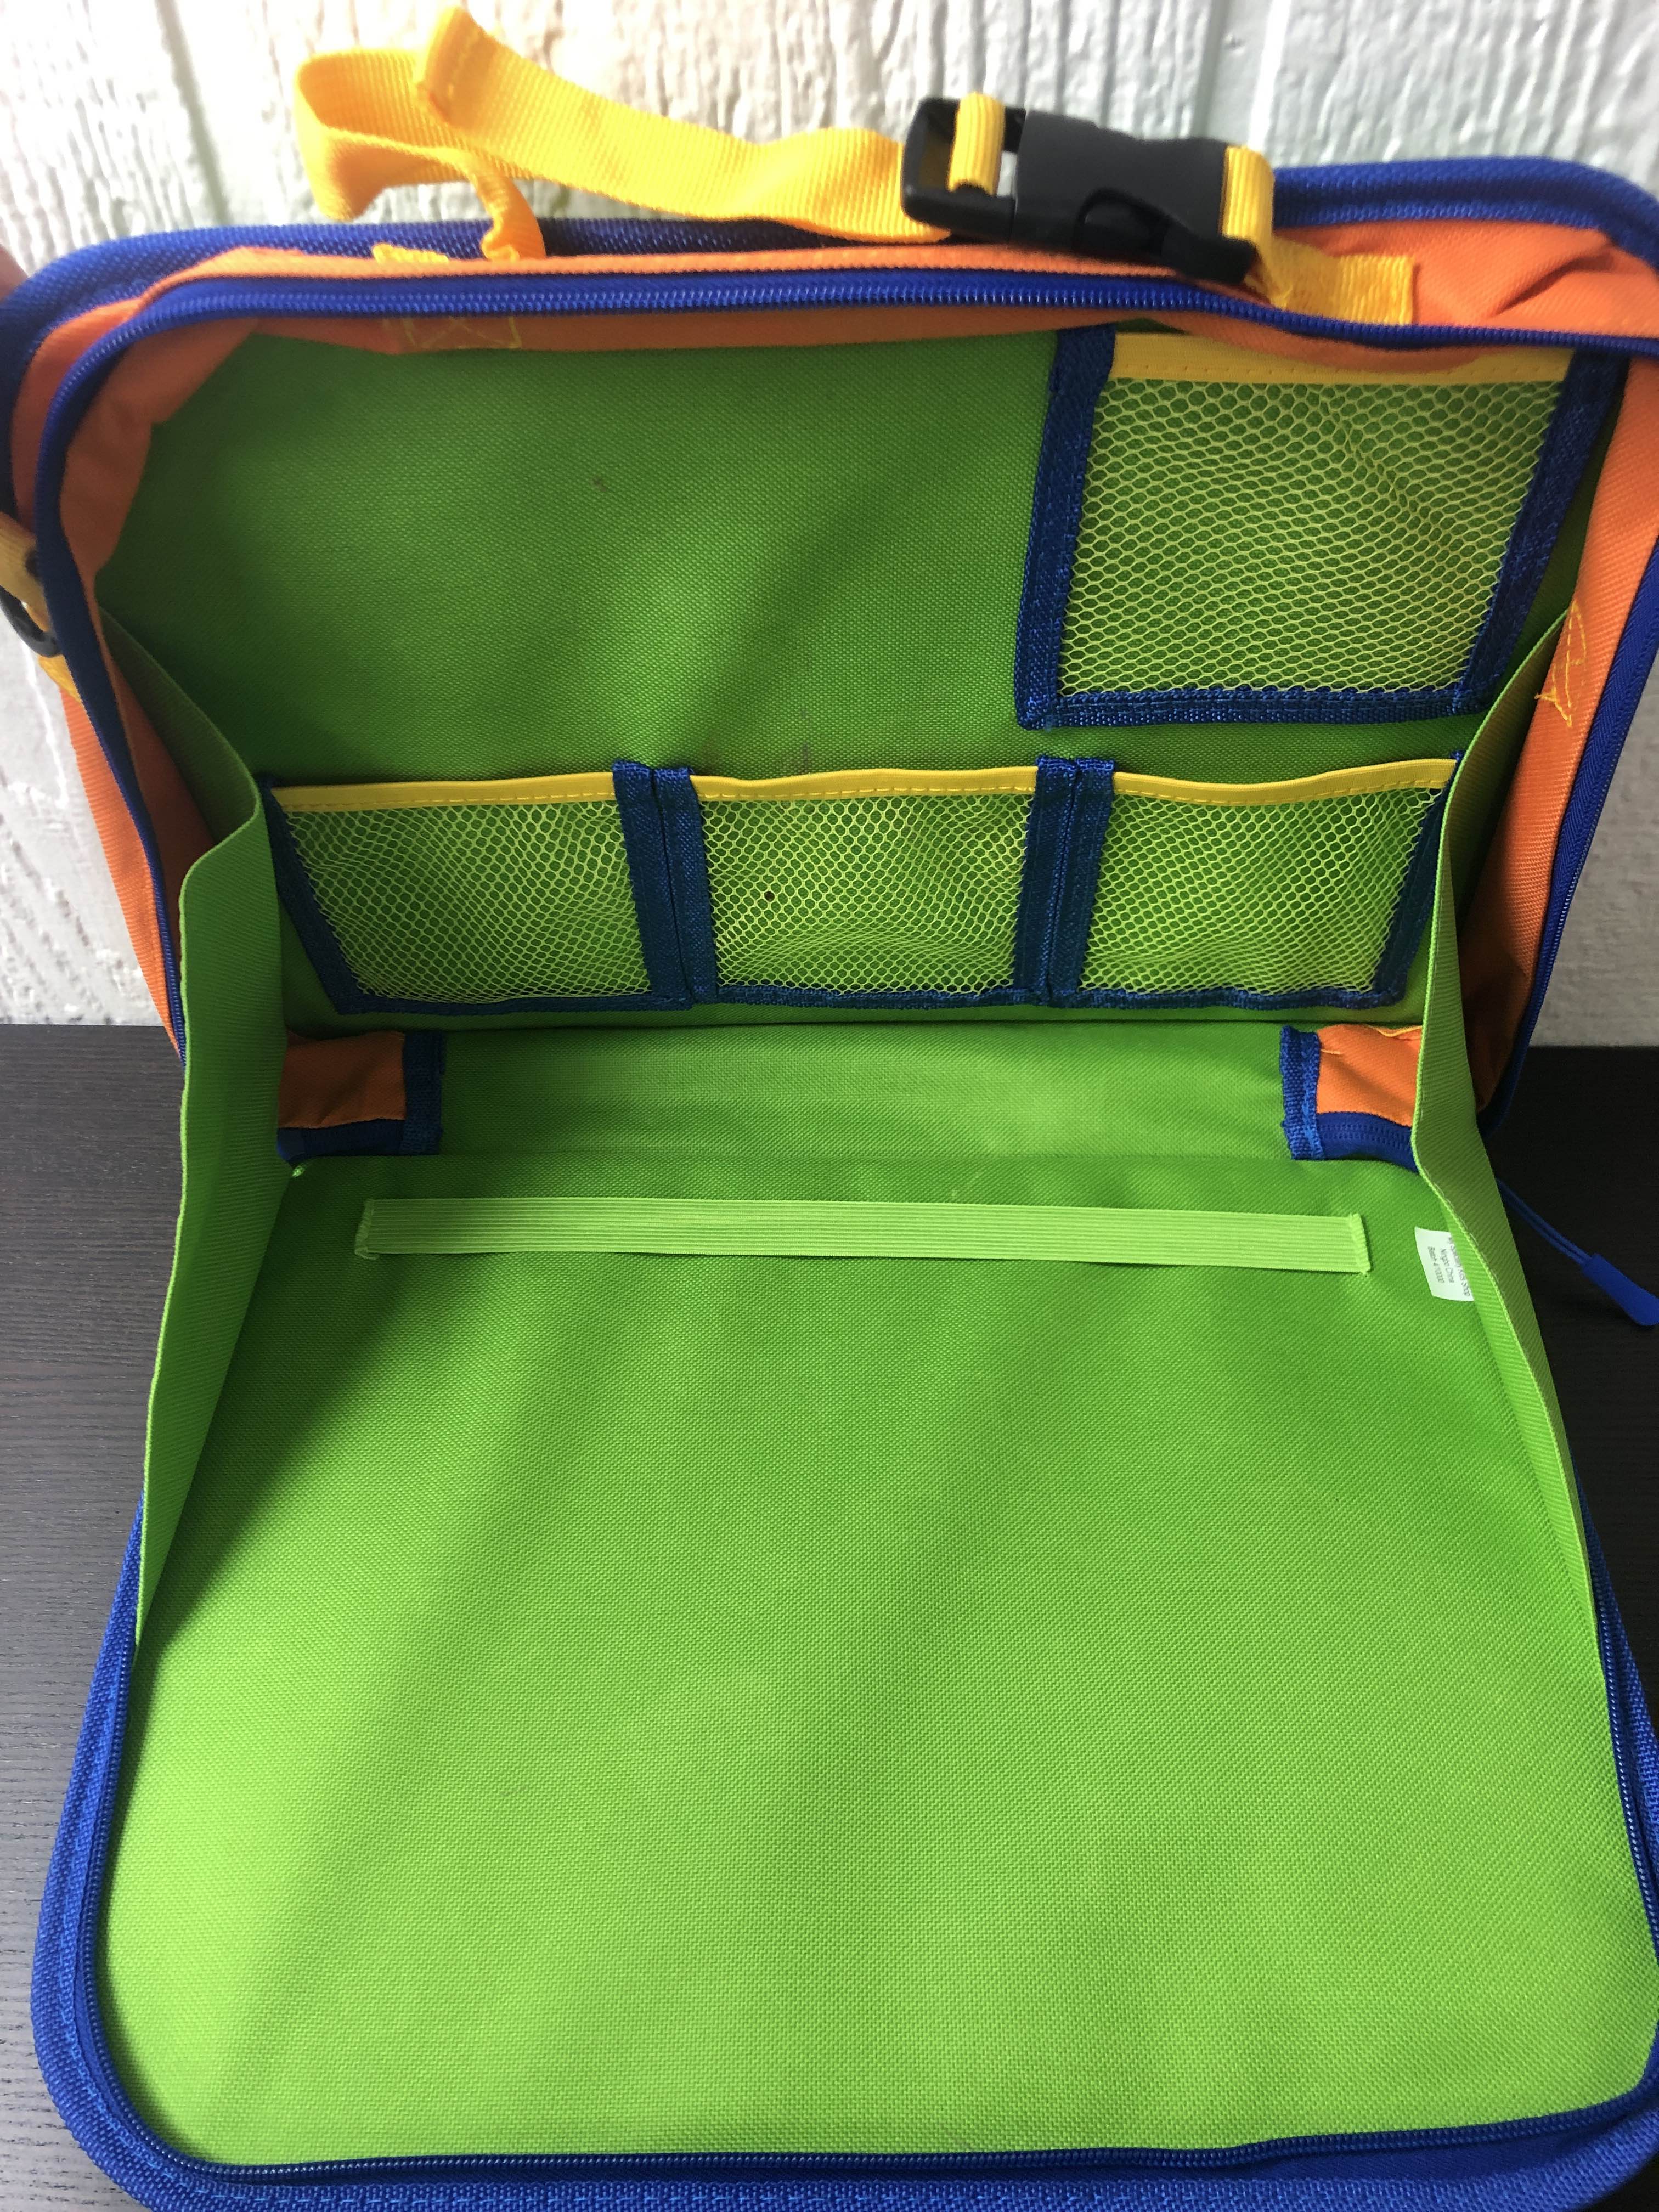 Kids Backseat Tray Organizer Holds Crayon Marker Lap Writing Surface For  Travel